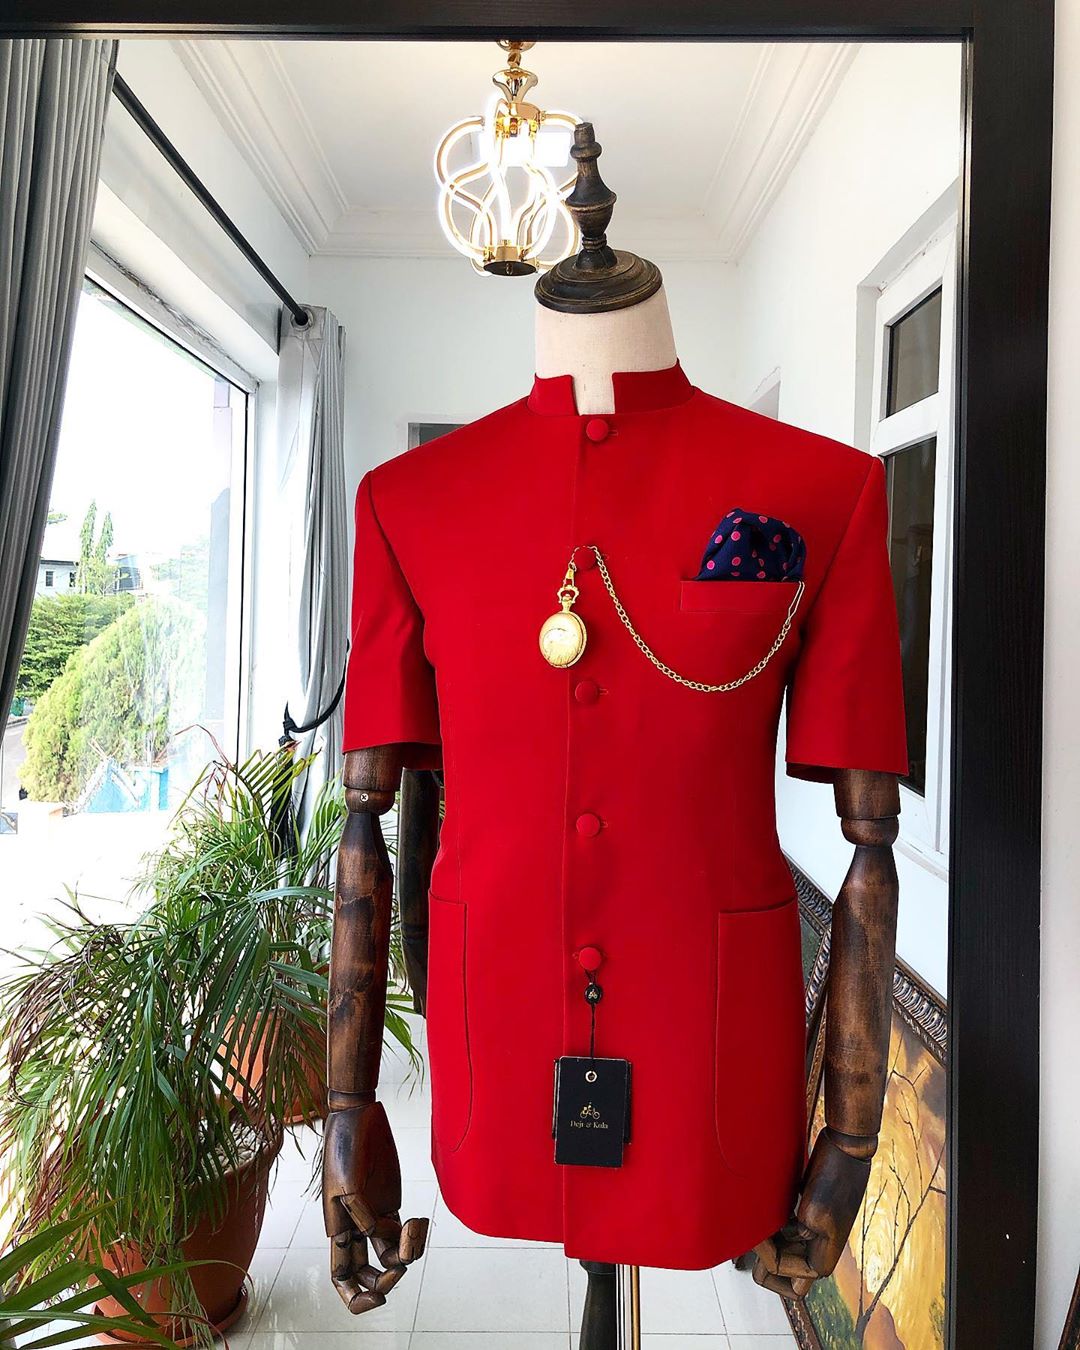 Dejiandkola - A Tomato Red “French“ Safari Suit. Online